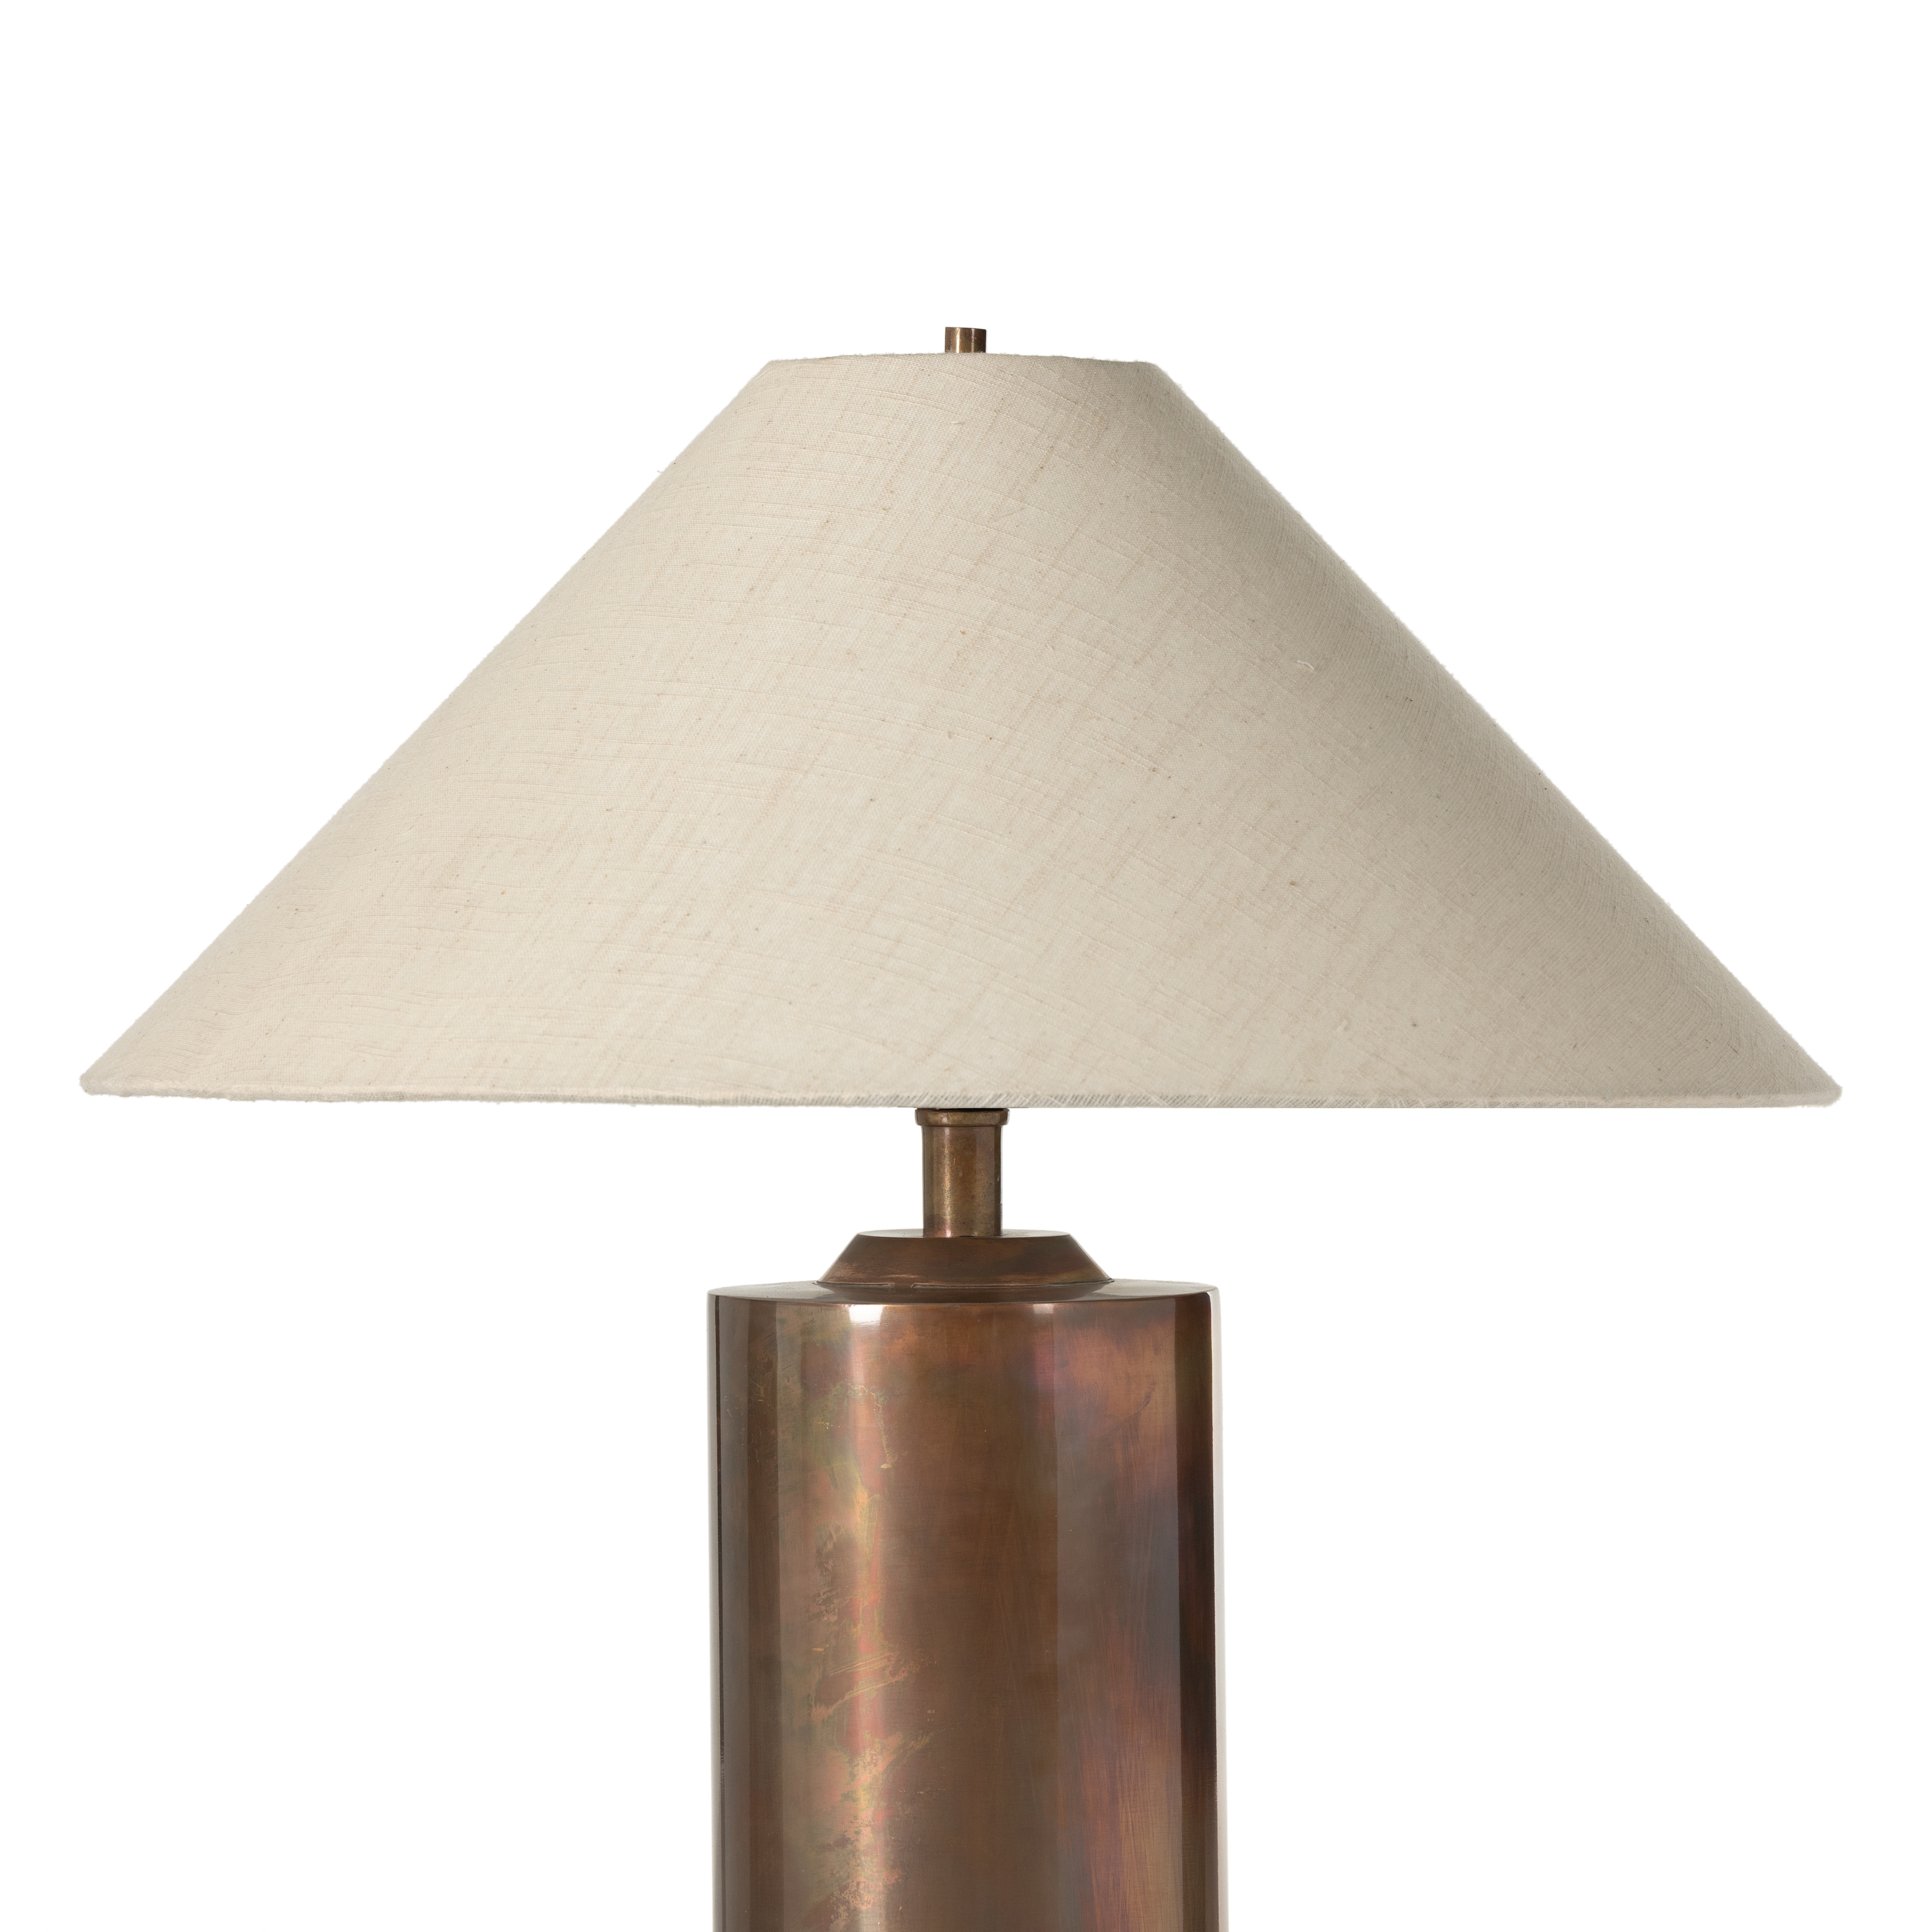 Seaton Table Lamp-Iridescent Acid Wash - Image 4